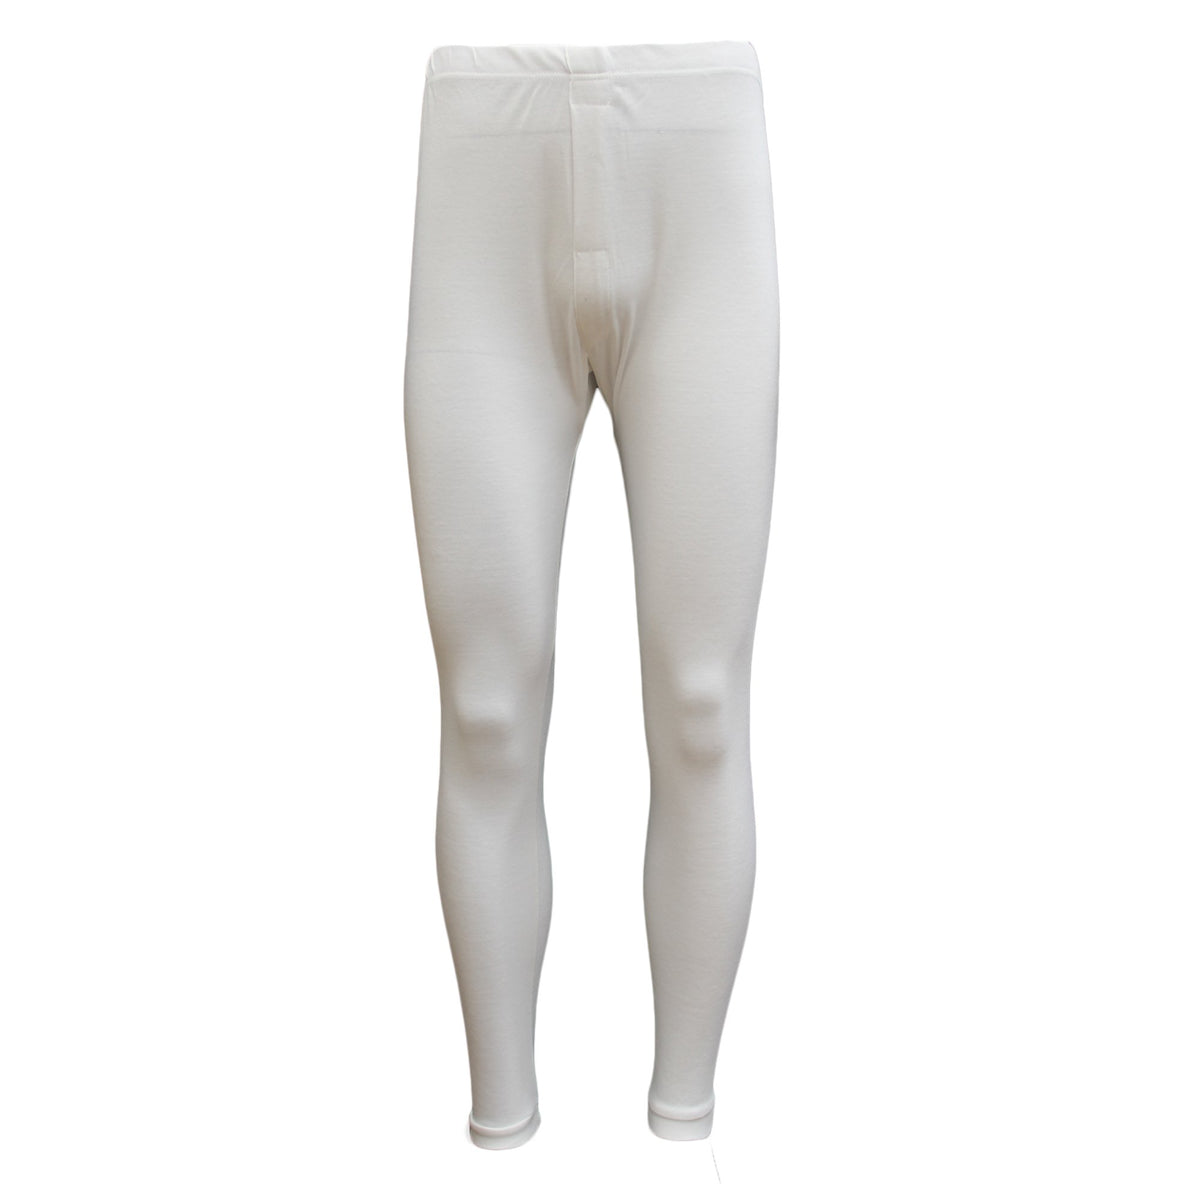 Mens Merino Wool Top Pants Thermal Leggings Long Johns Underwear Pajamas, Men&#39;s Long Johns - Beige, M